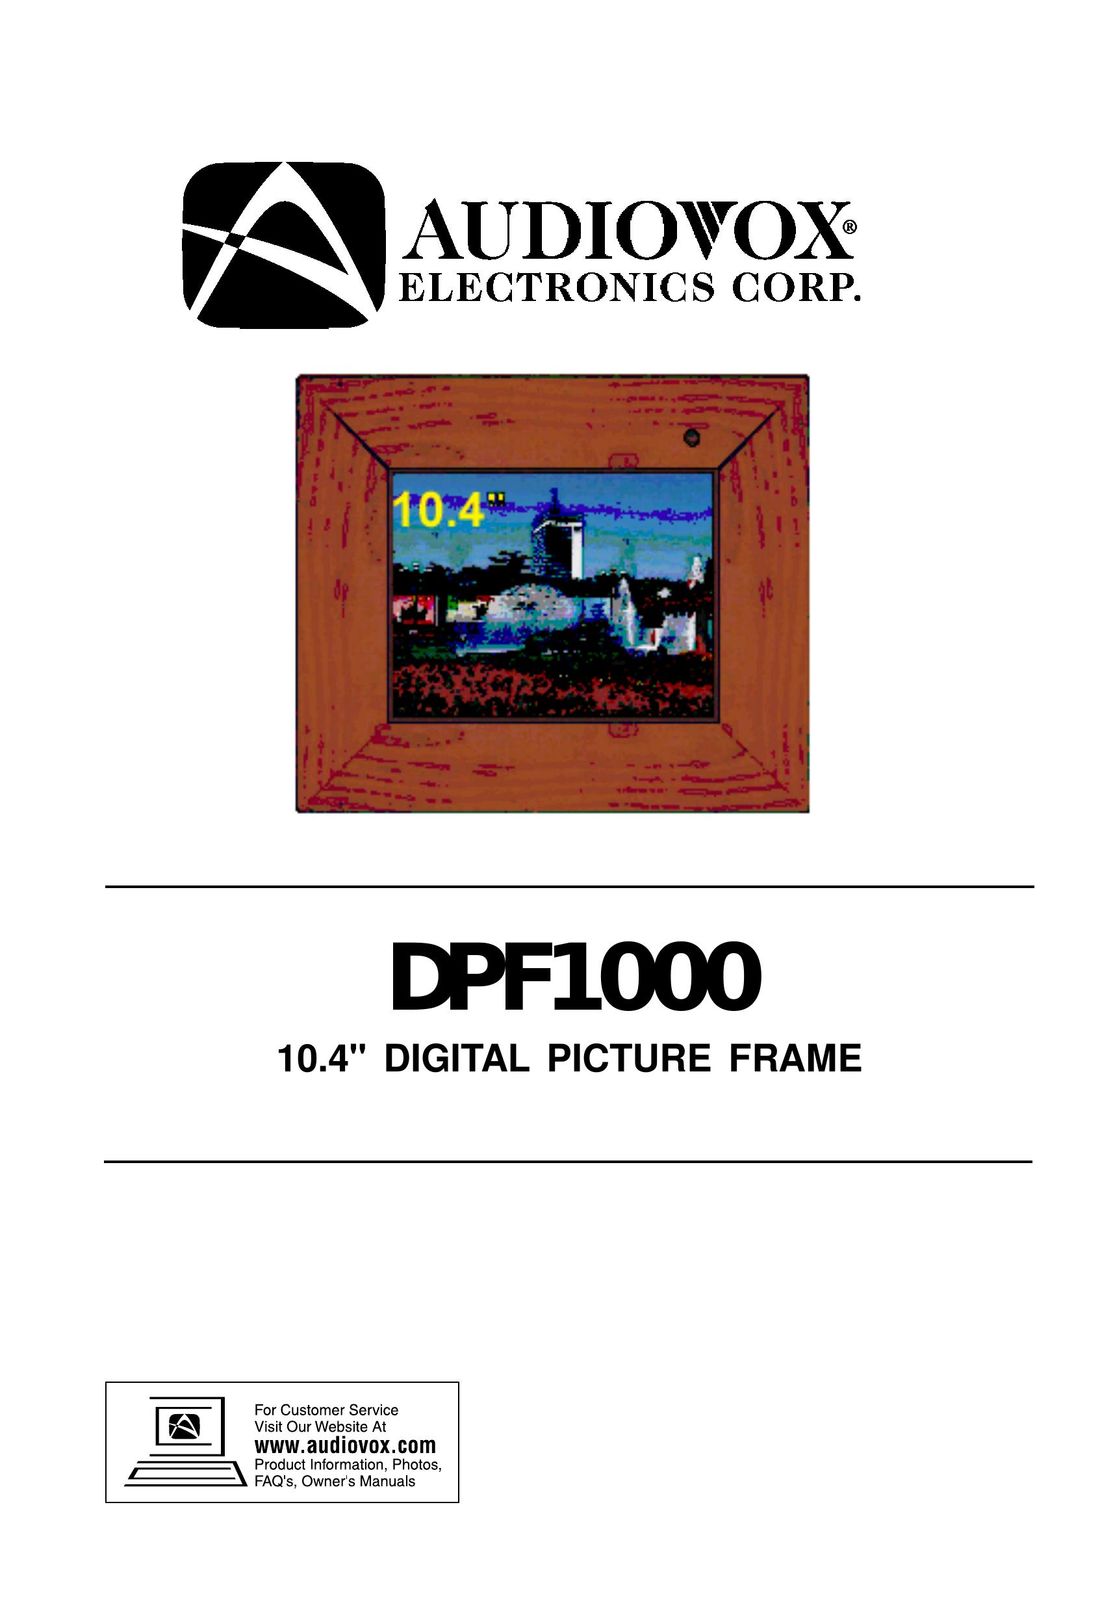 Audiovox DPF1000 MP3 Player User Manual